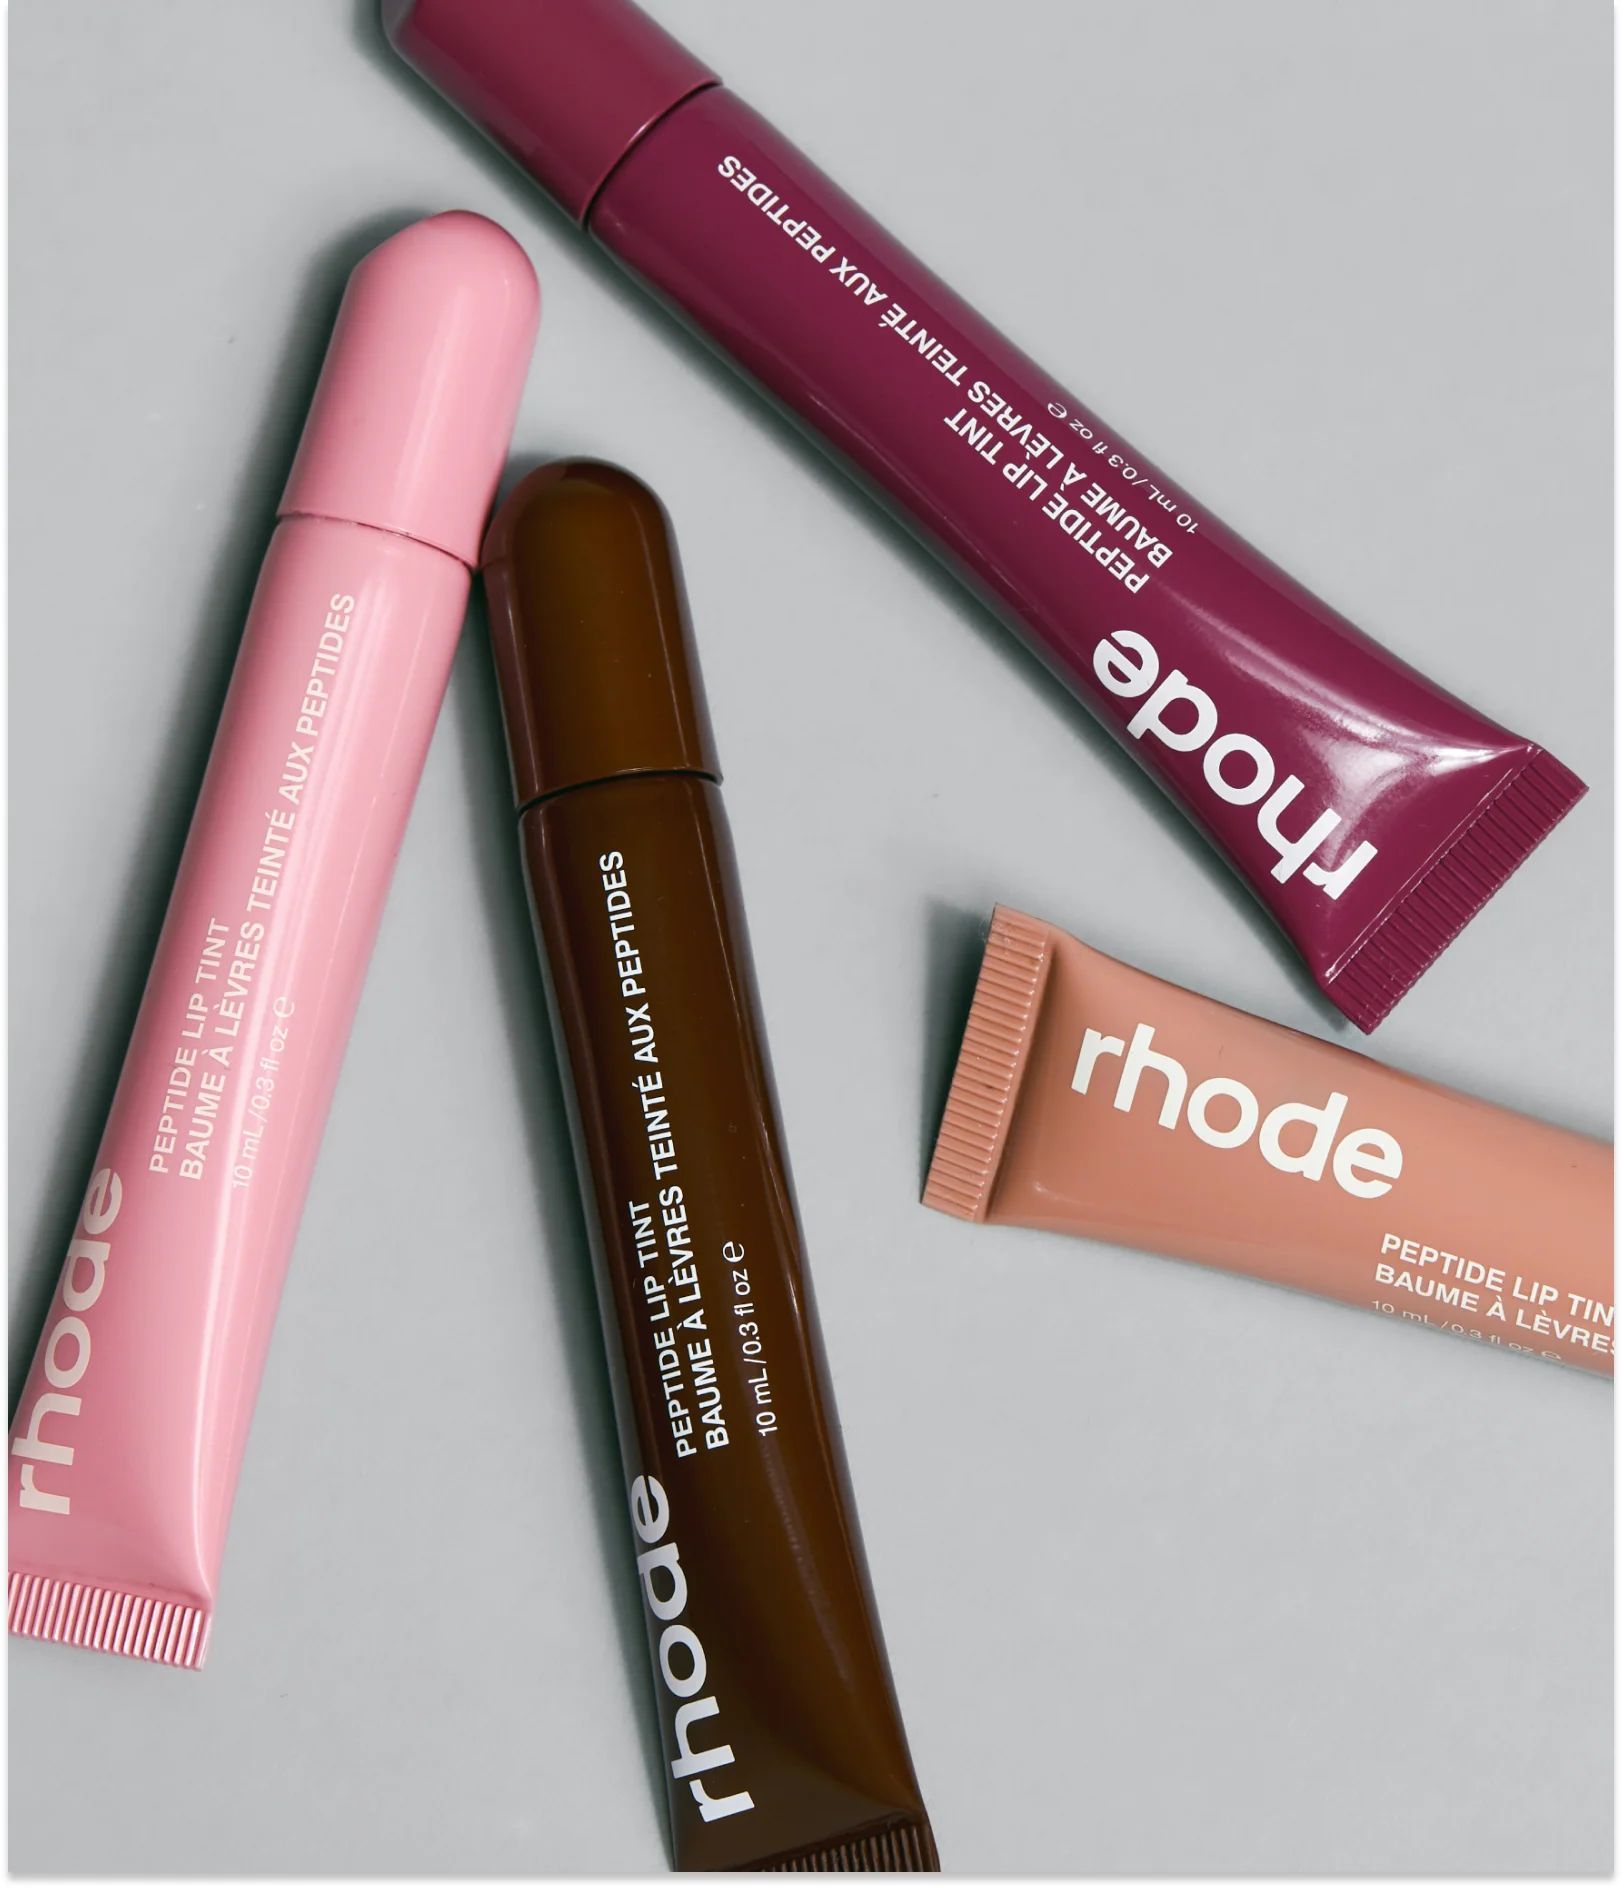 peptide lip tint | rhode skin